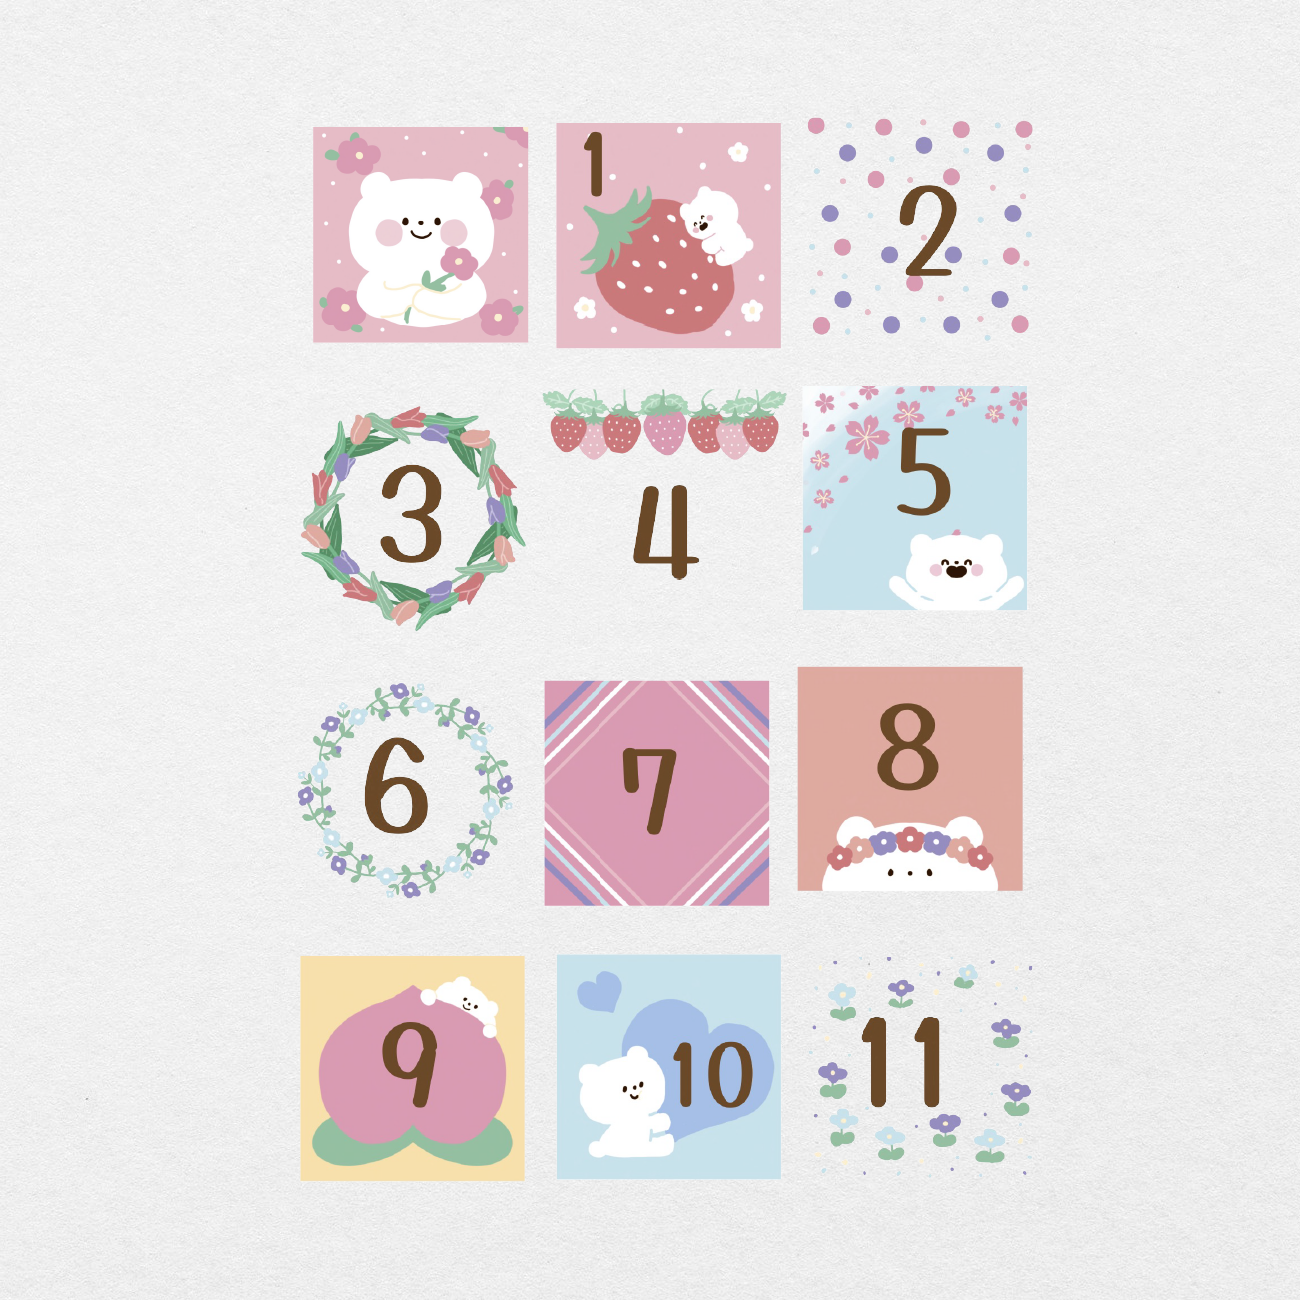 32 Digital Blooming Bear Sticker Bundle - Stationery Pal